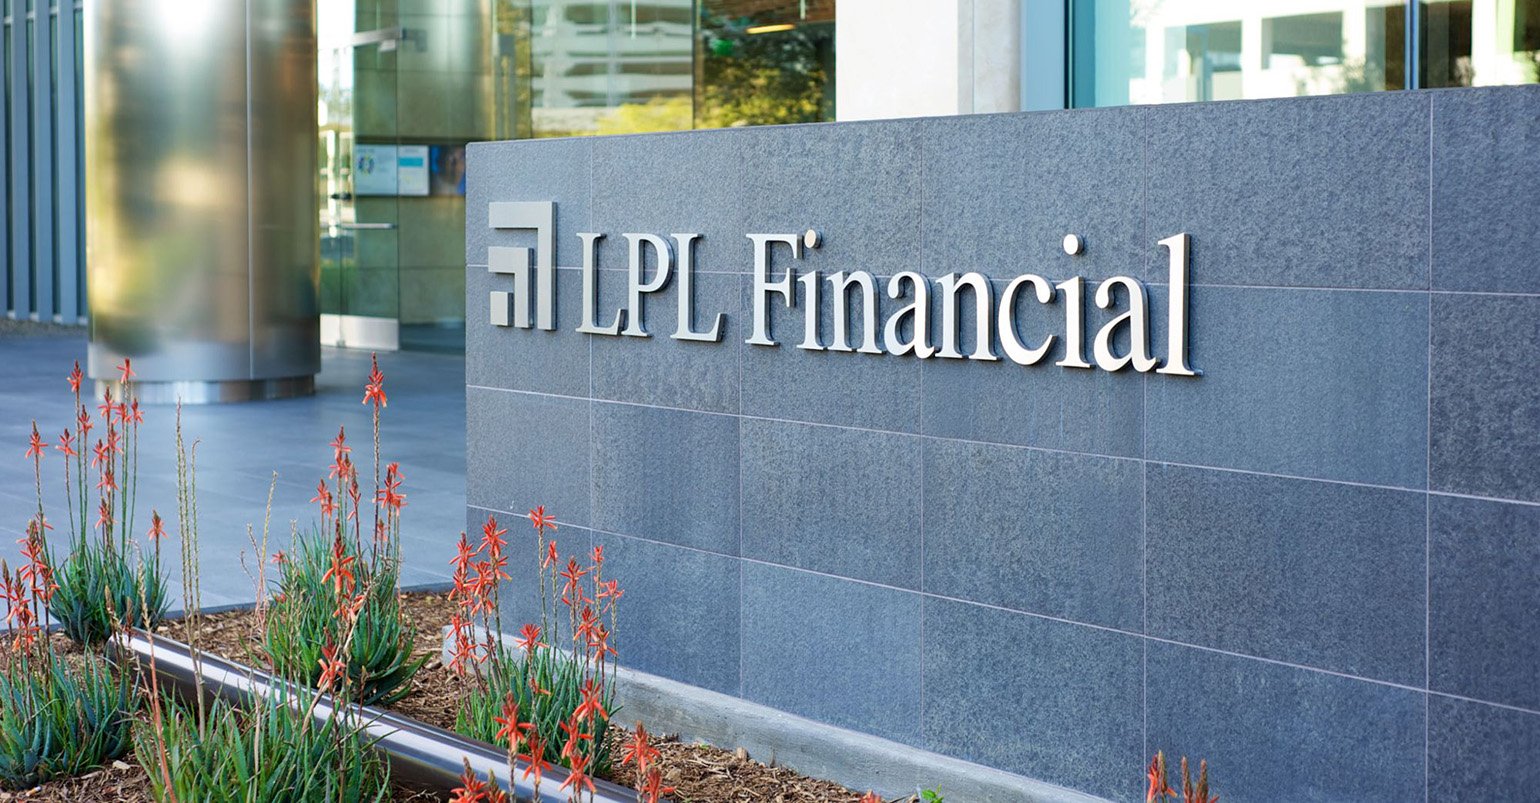 LPL Boosts Advisors, Assets in Q1